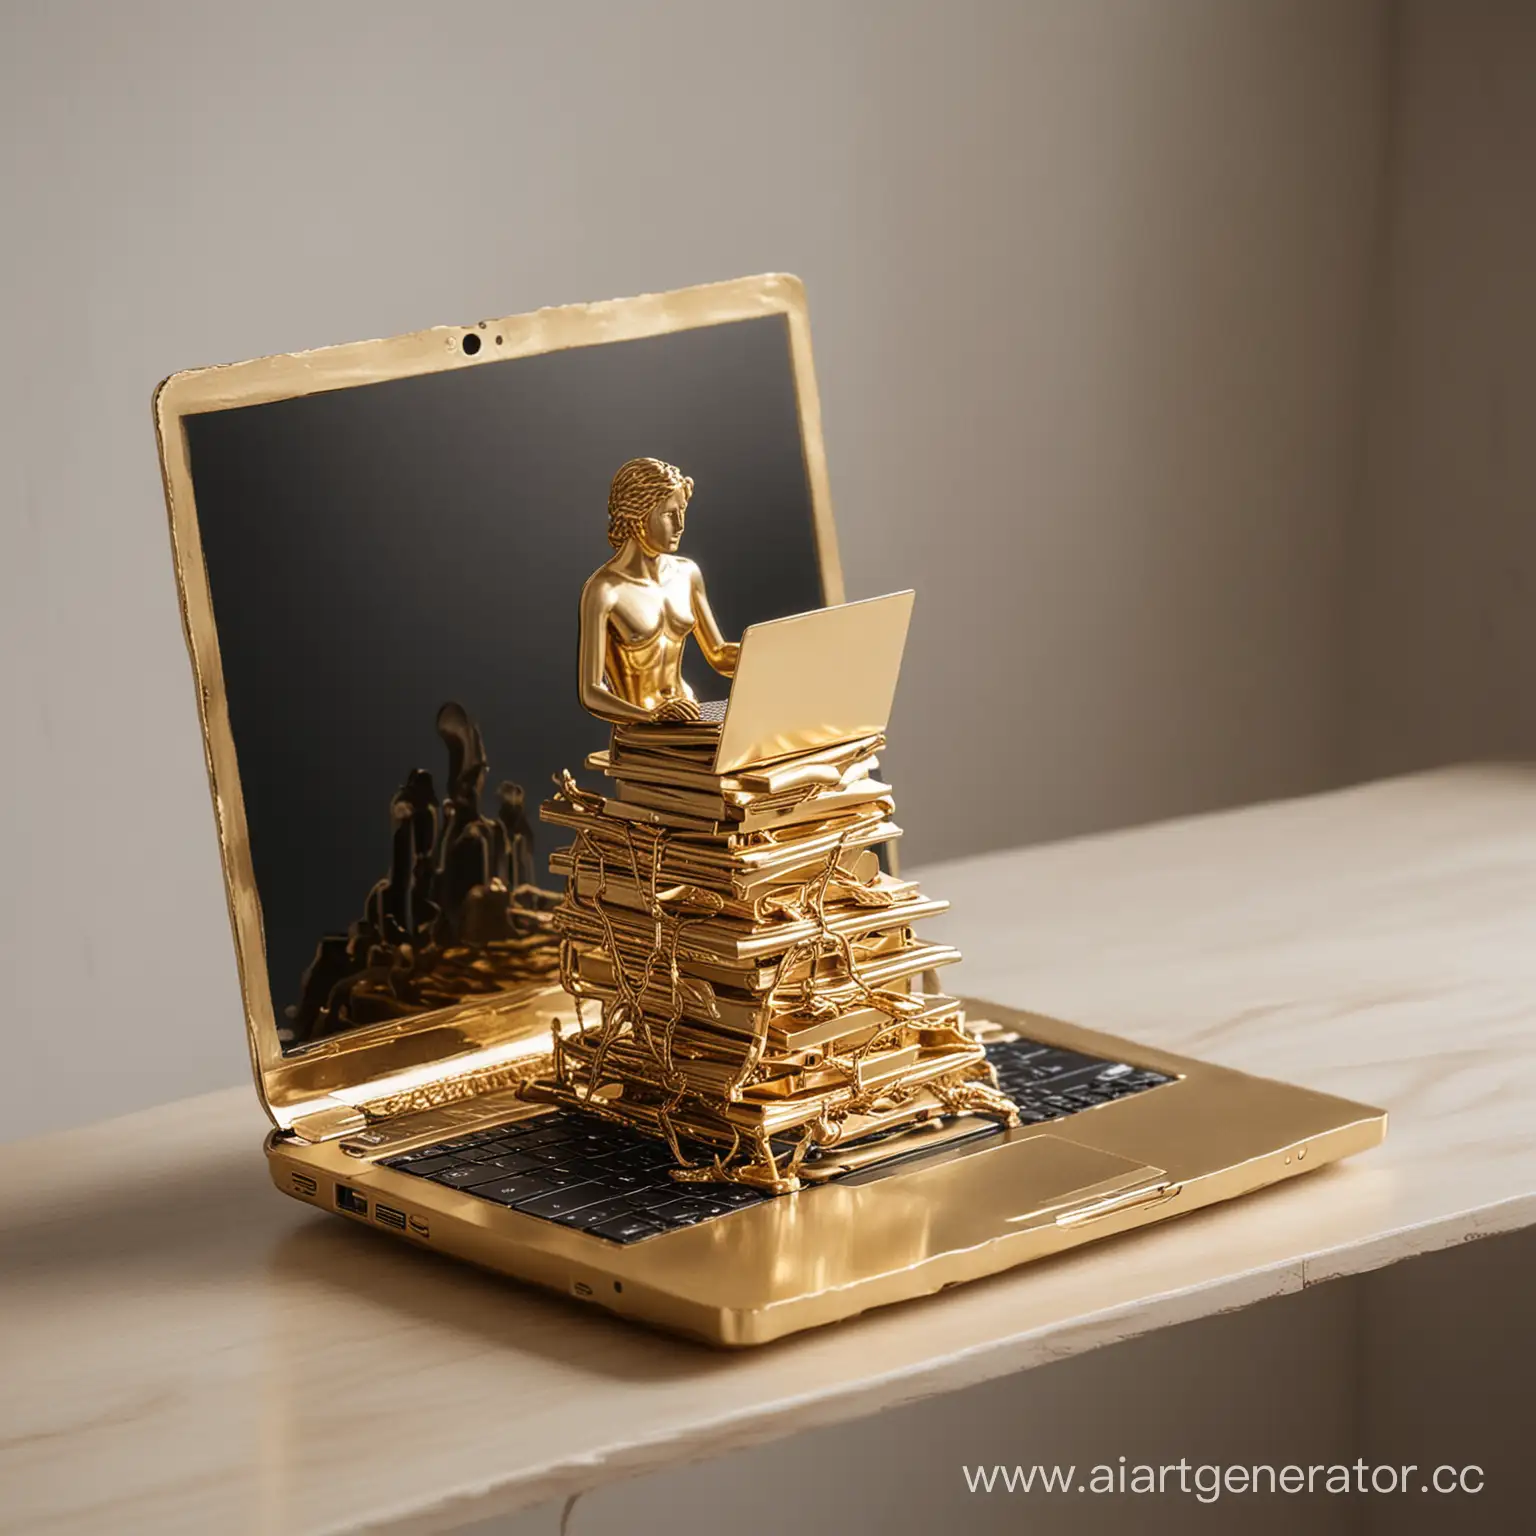 Golden-Metal-Sculpture-Supporting-Laptop